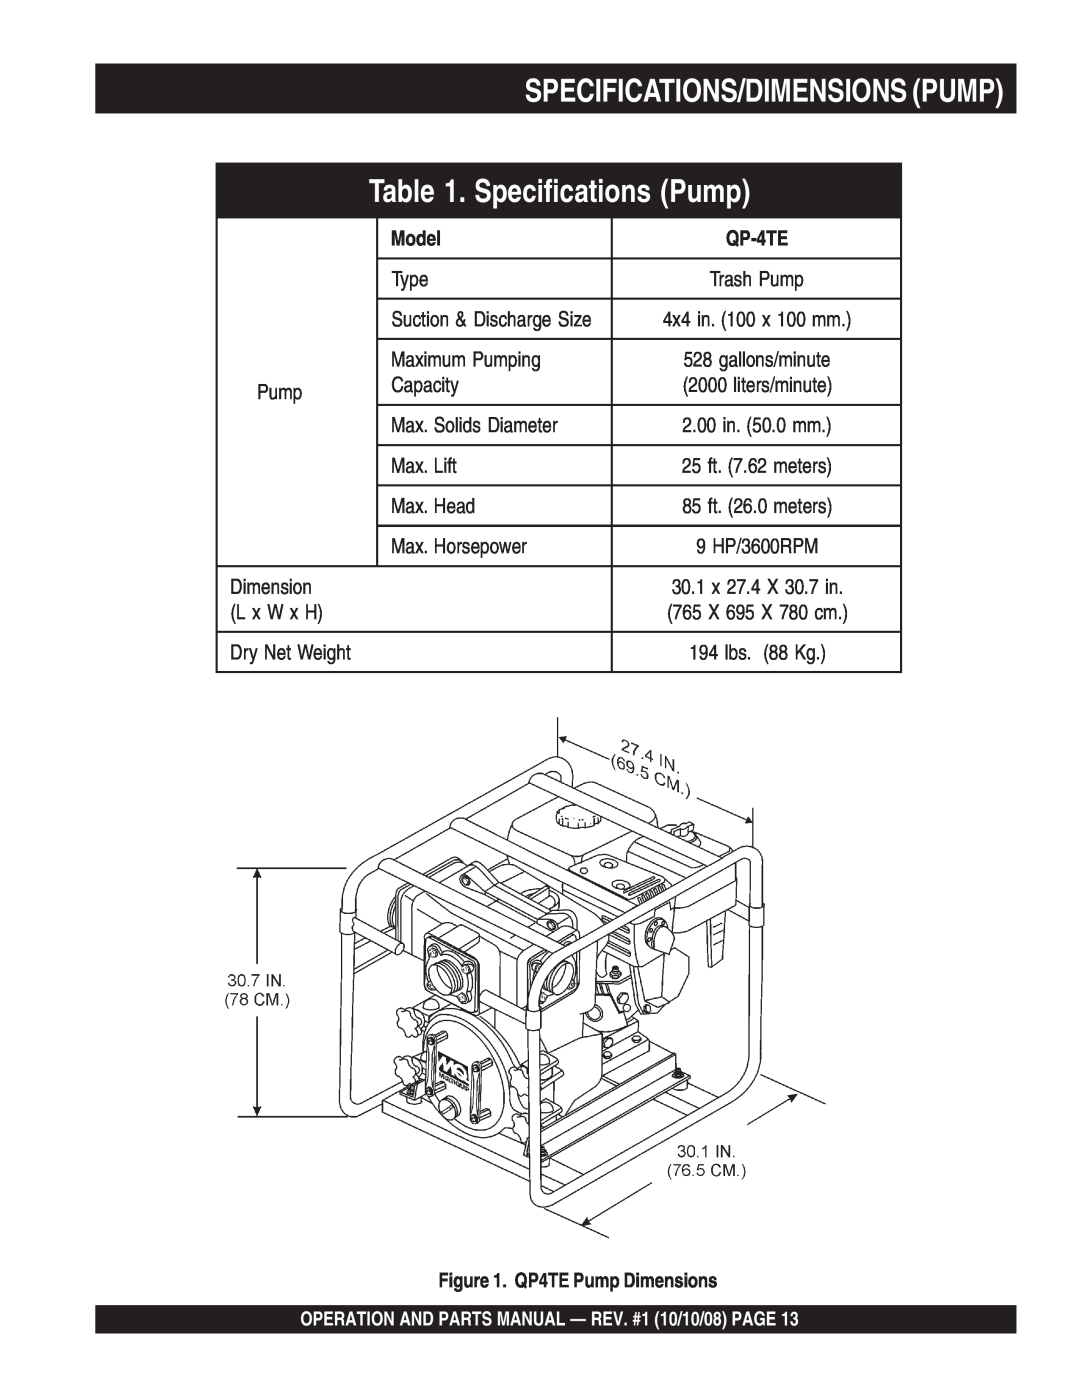 Multiquip QP4TE manual Specifications Pump, Specifications/Dimensions Pump, Model, QP-4TE 